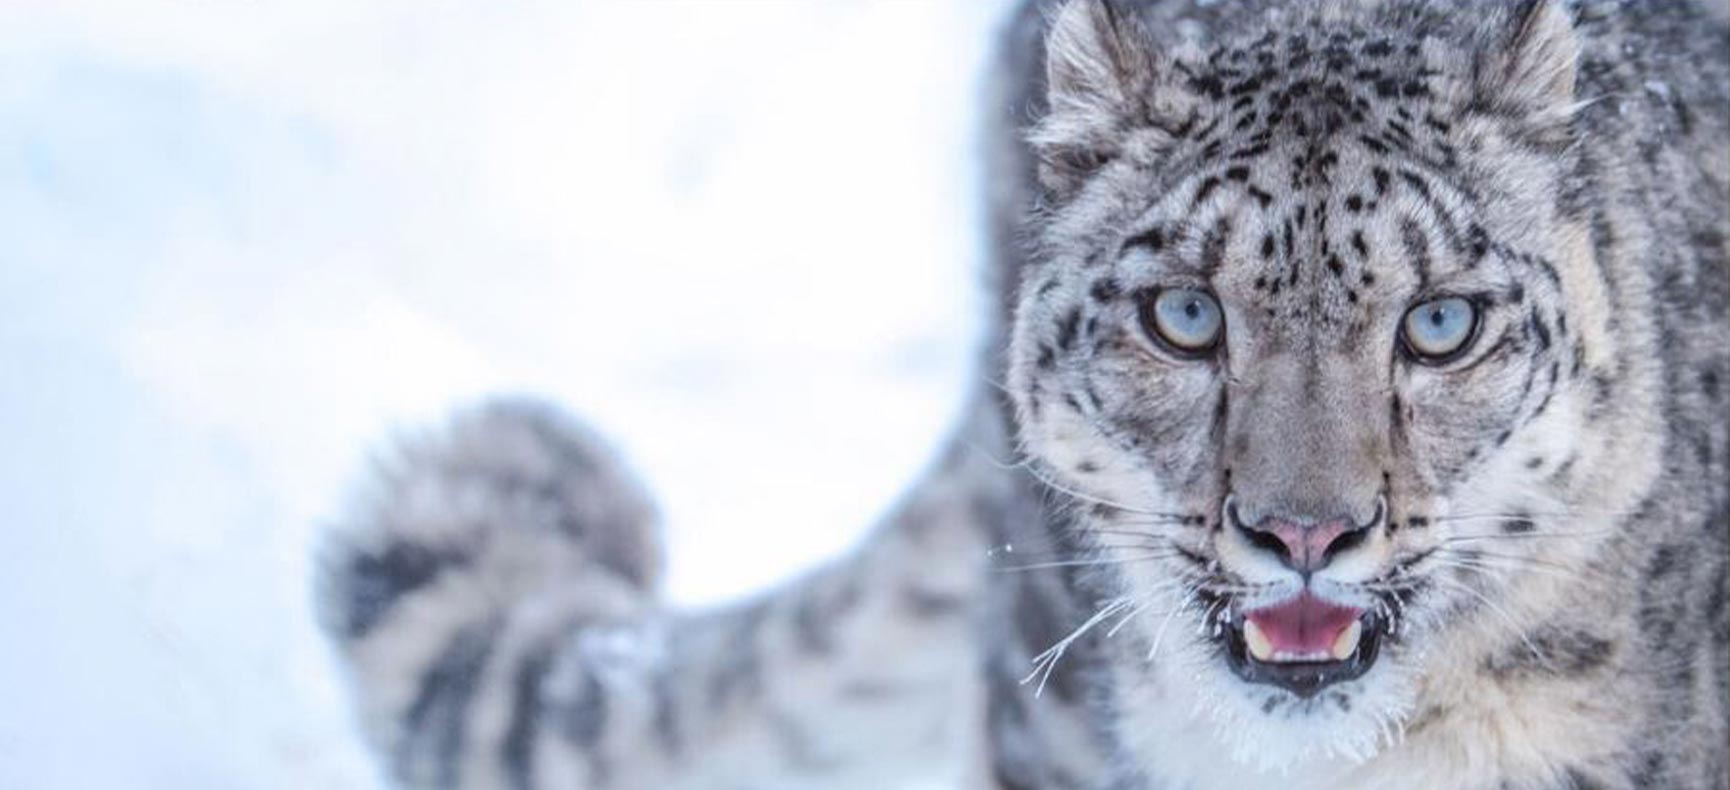 The Snow Leopard in Karakoram - Beyond the Valley (2)